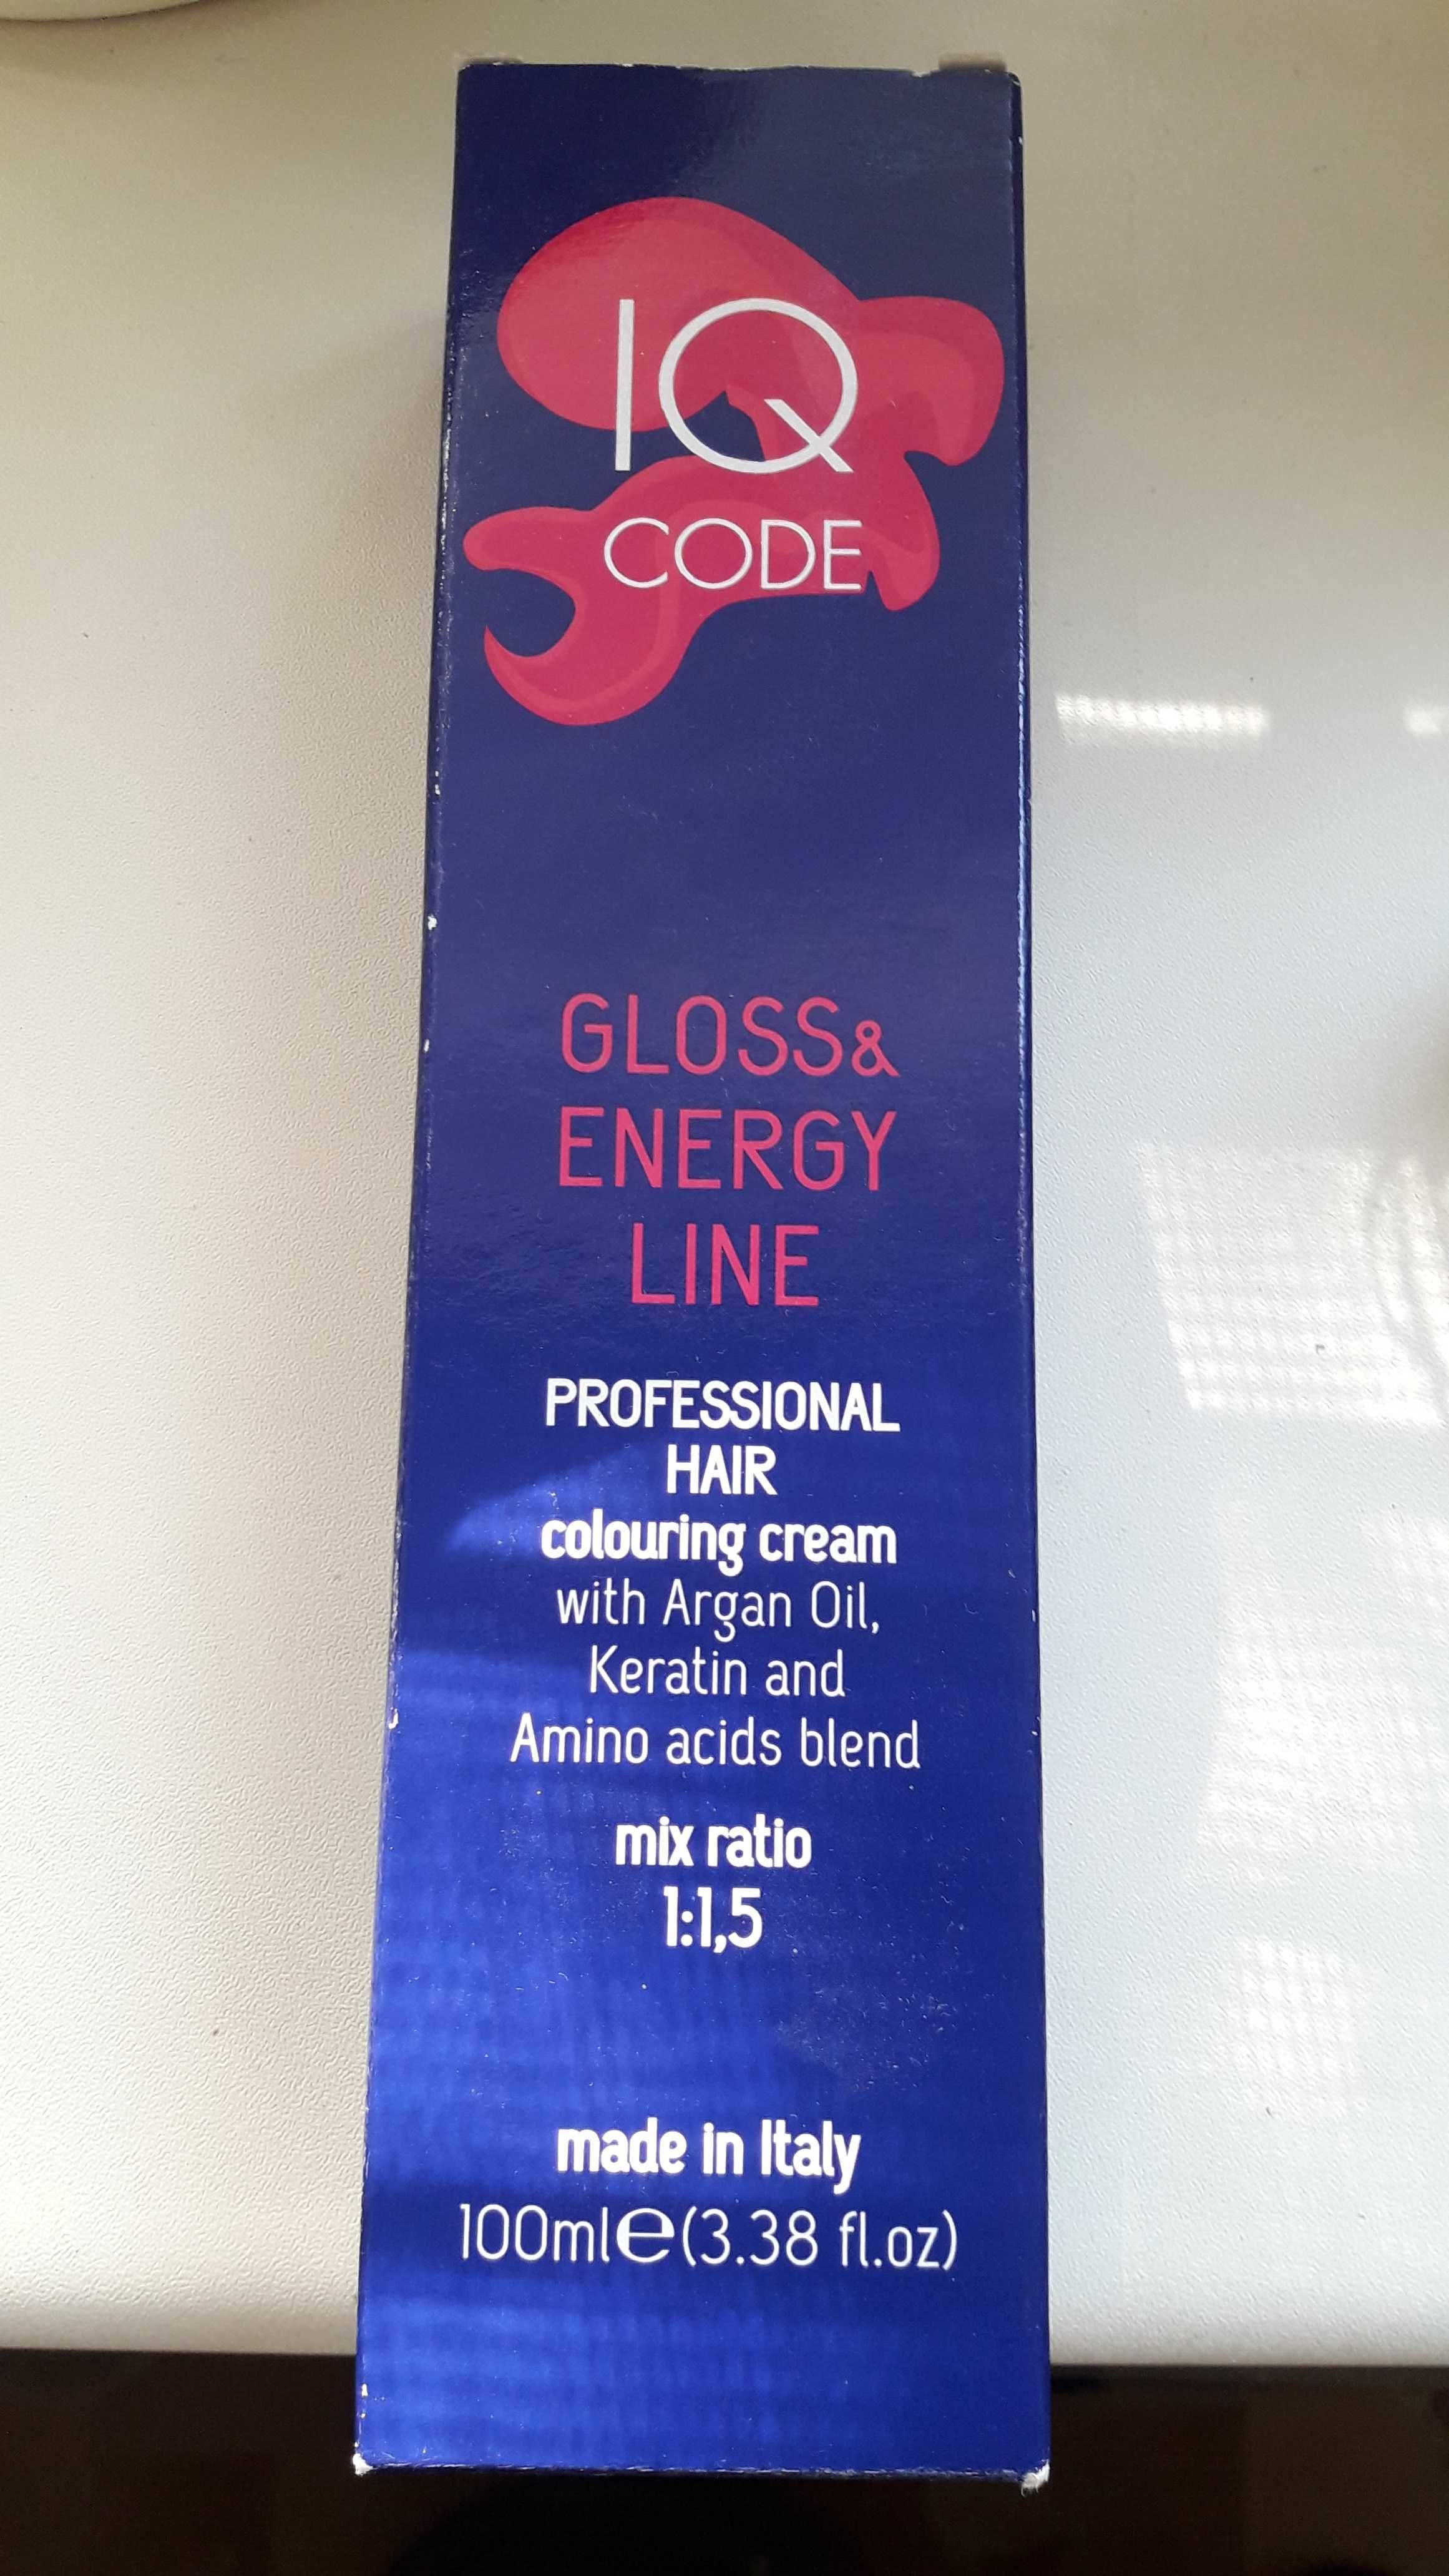 Професійна фарба для волосся IQ Code Gloss & Energy Line